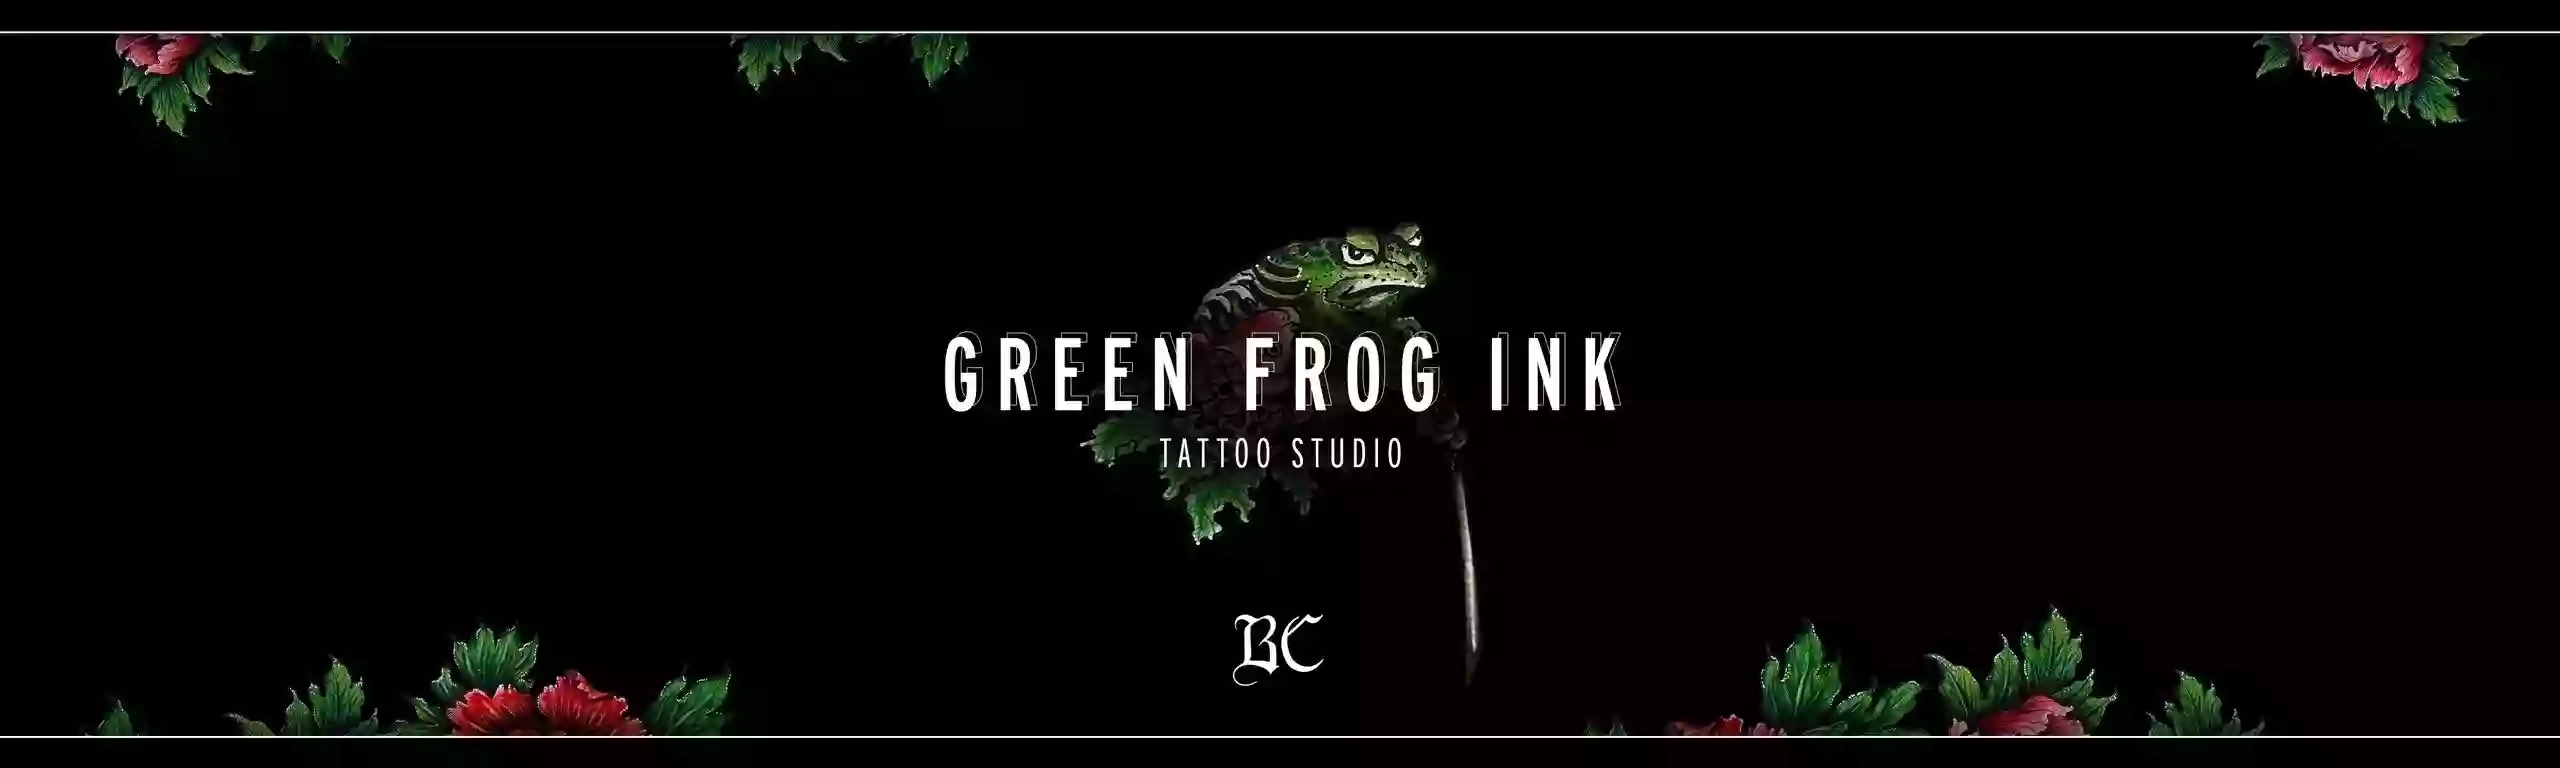 Green Frog Ink